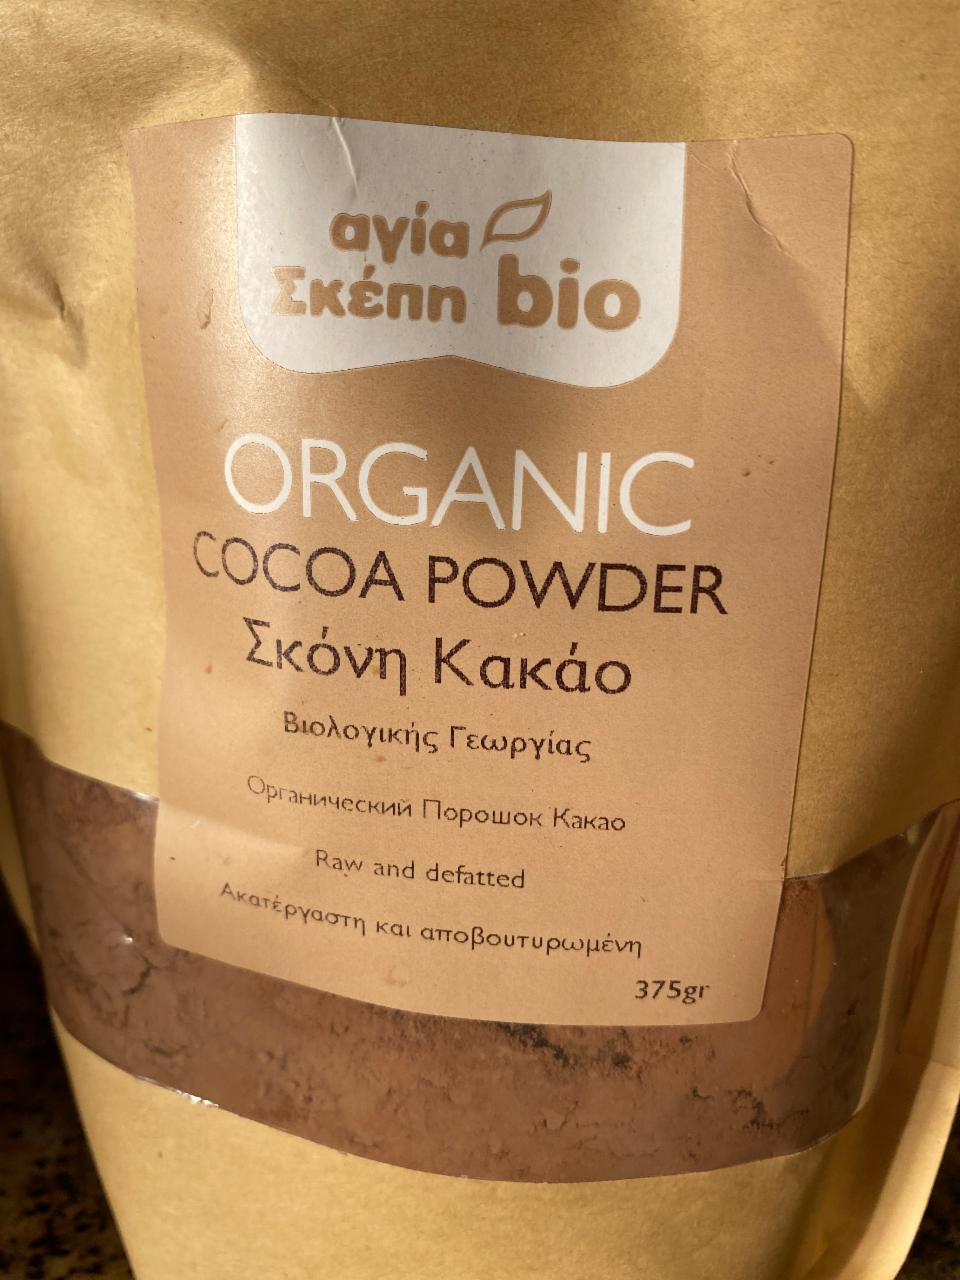 Фото - Organic Cocoa Powder Agia Skepi Bio